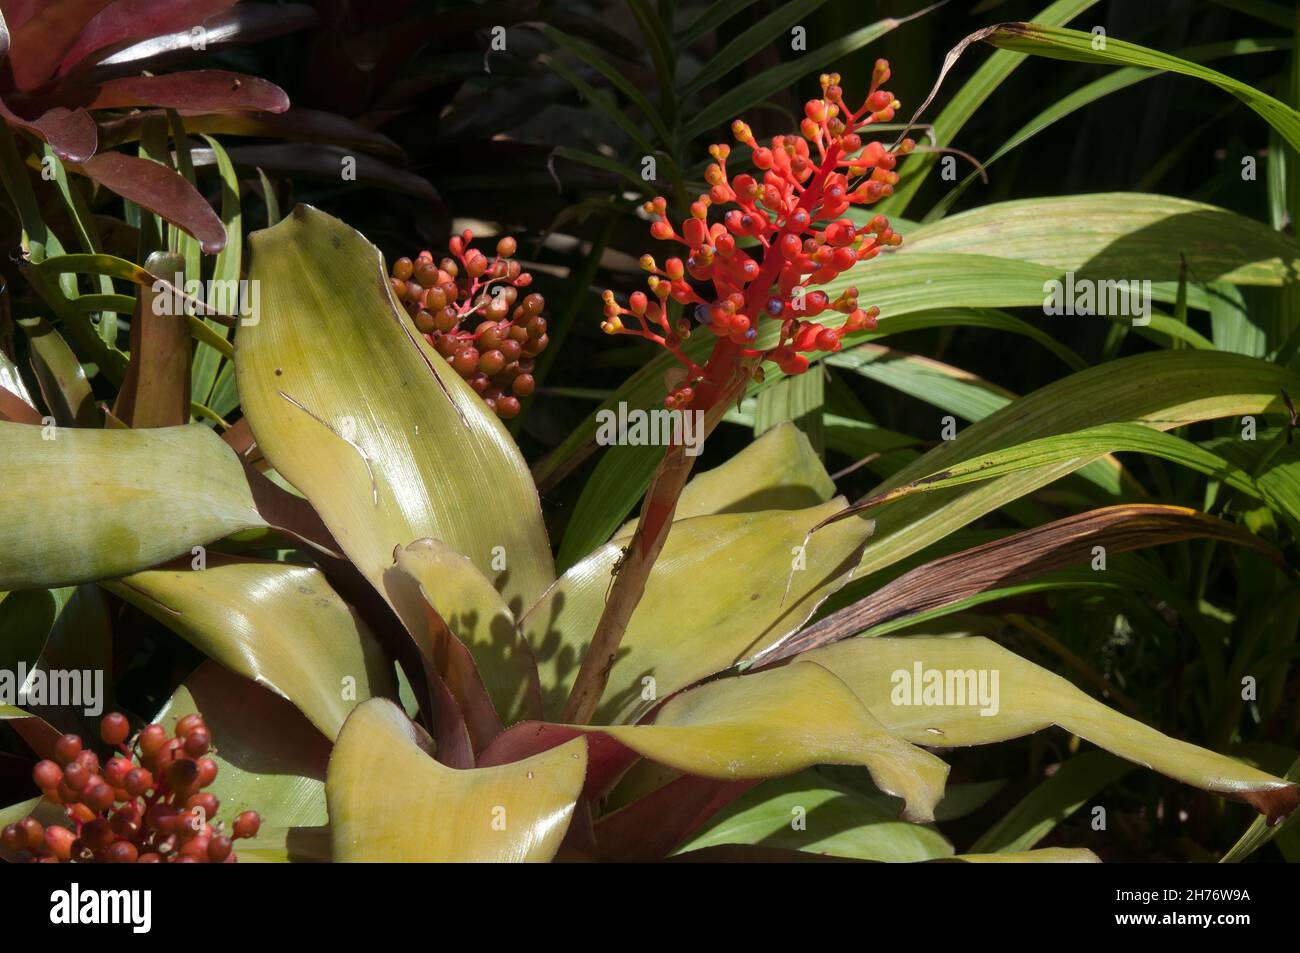 Sydney Australia, orange flower stem of a bromeliad plant Stock Photo